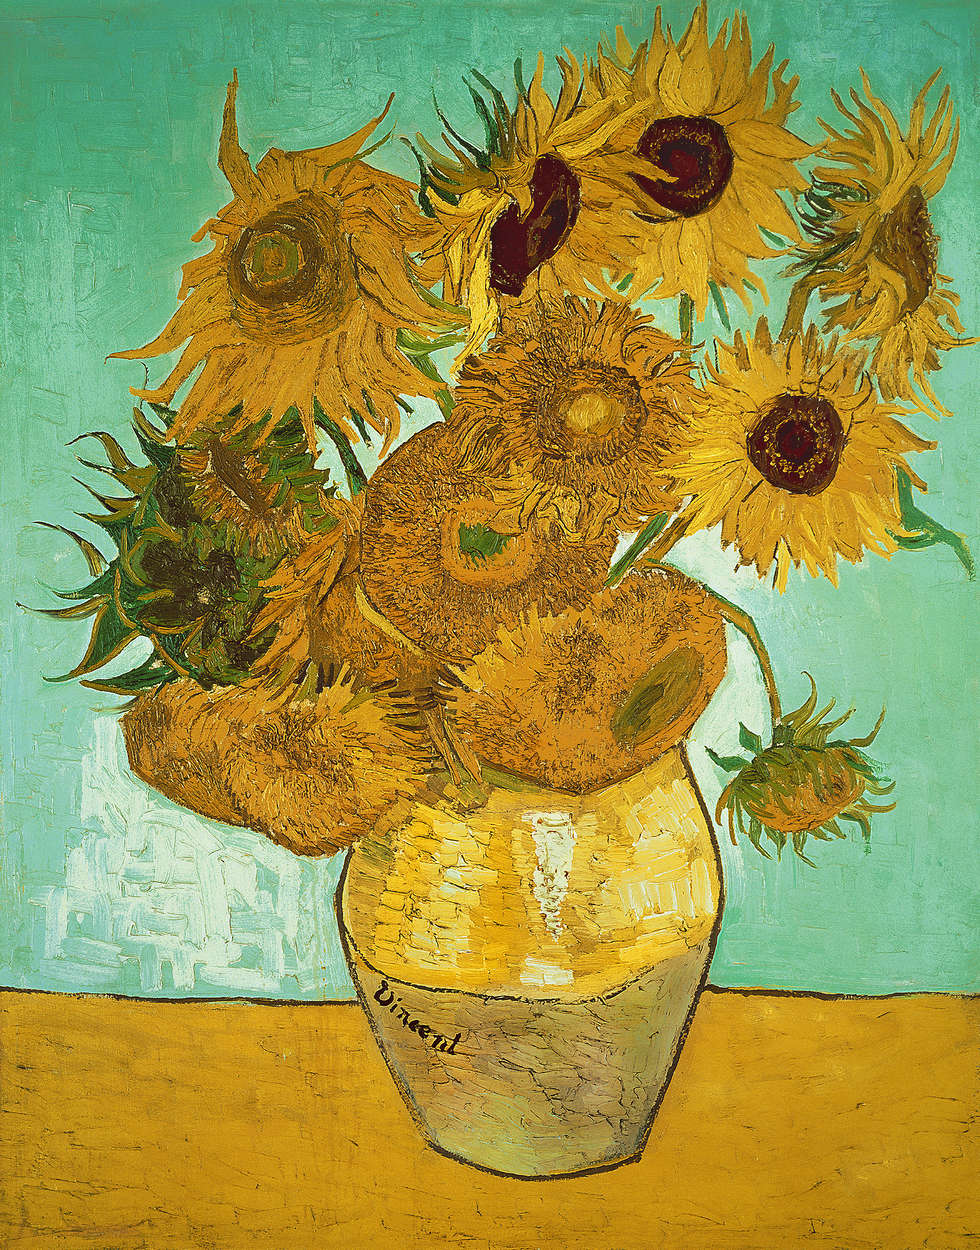             Il murale "Girasoli" di Vincent van Gogh
        